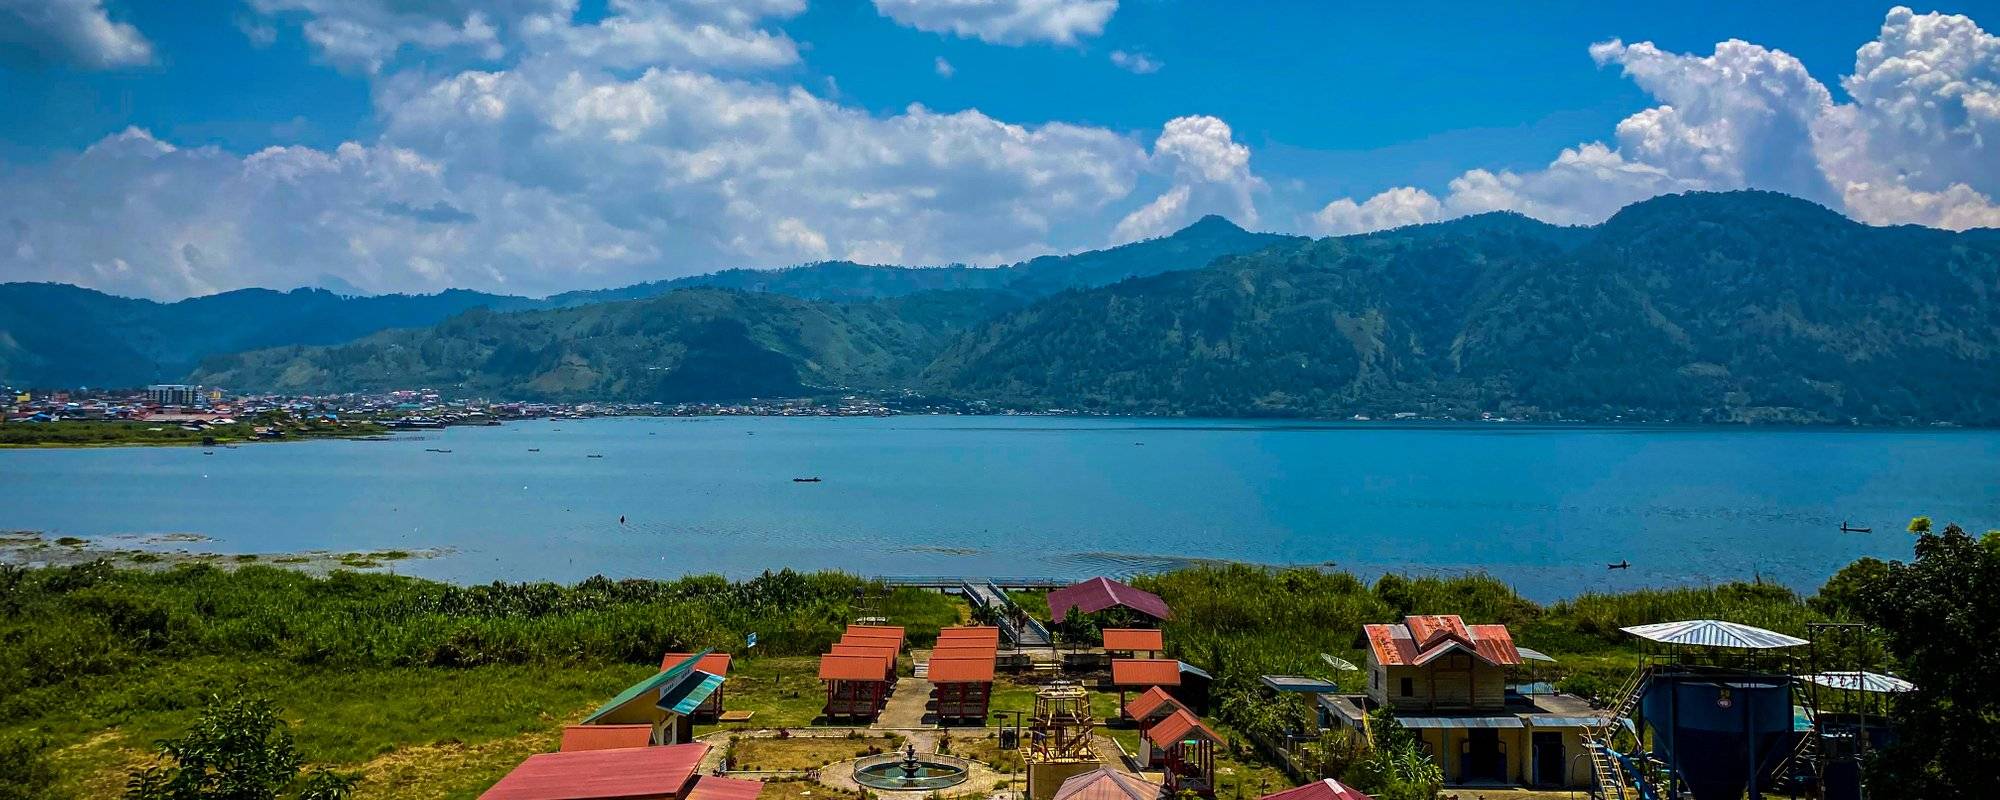 View of the Hakim Bale Bujang Village Tourism Pier